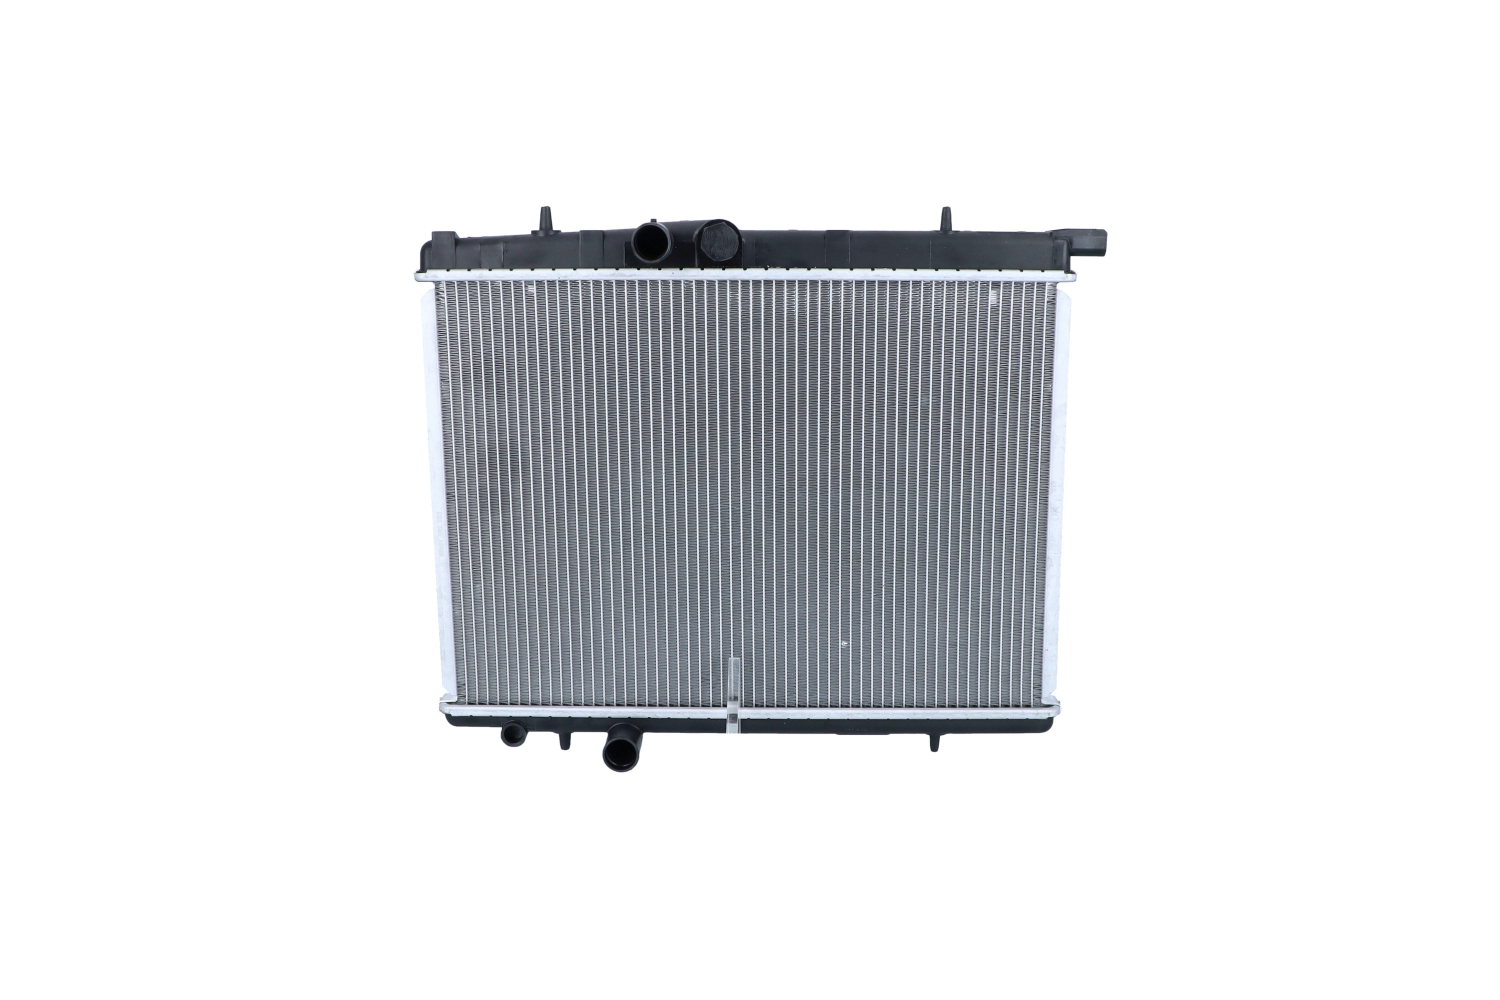 NRF 509525 Engine radiator Aluminium, 534 x 380 x 24 mm, Brazed cooling fins